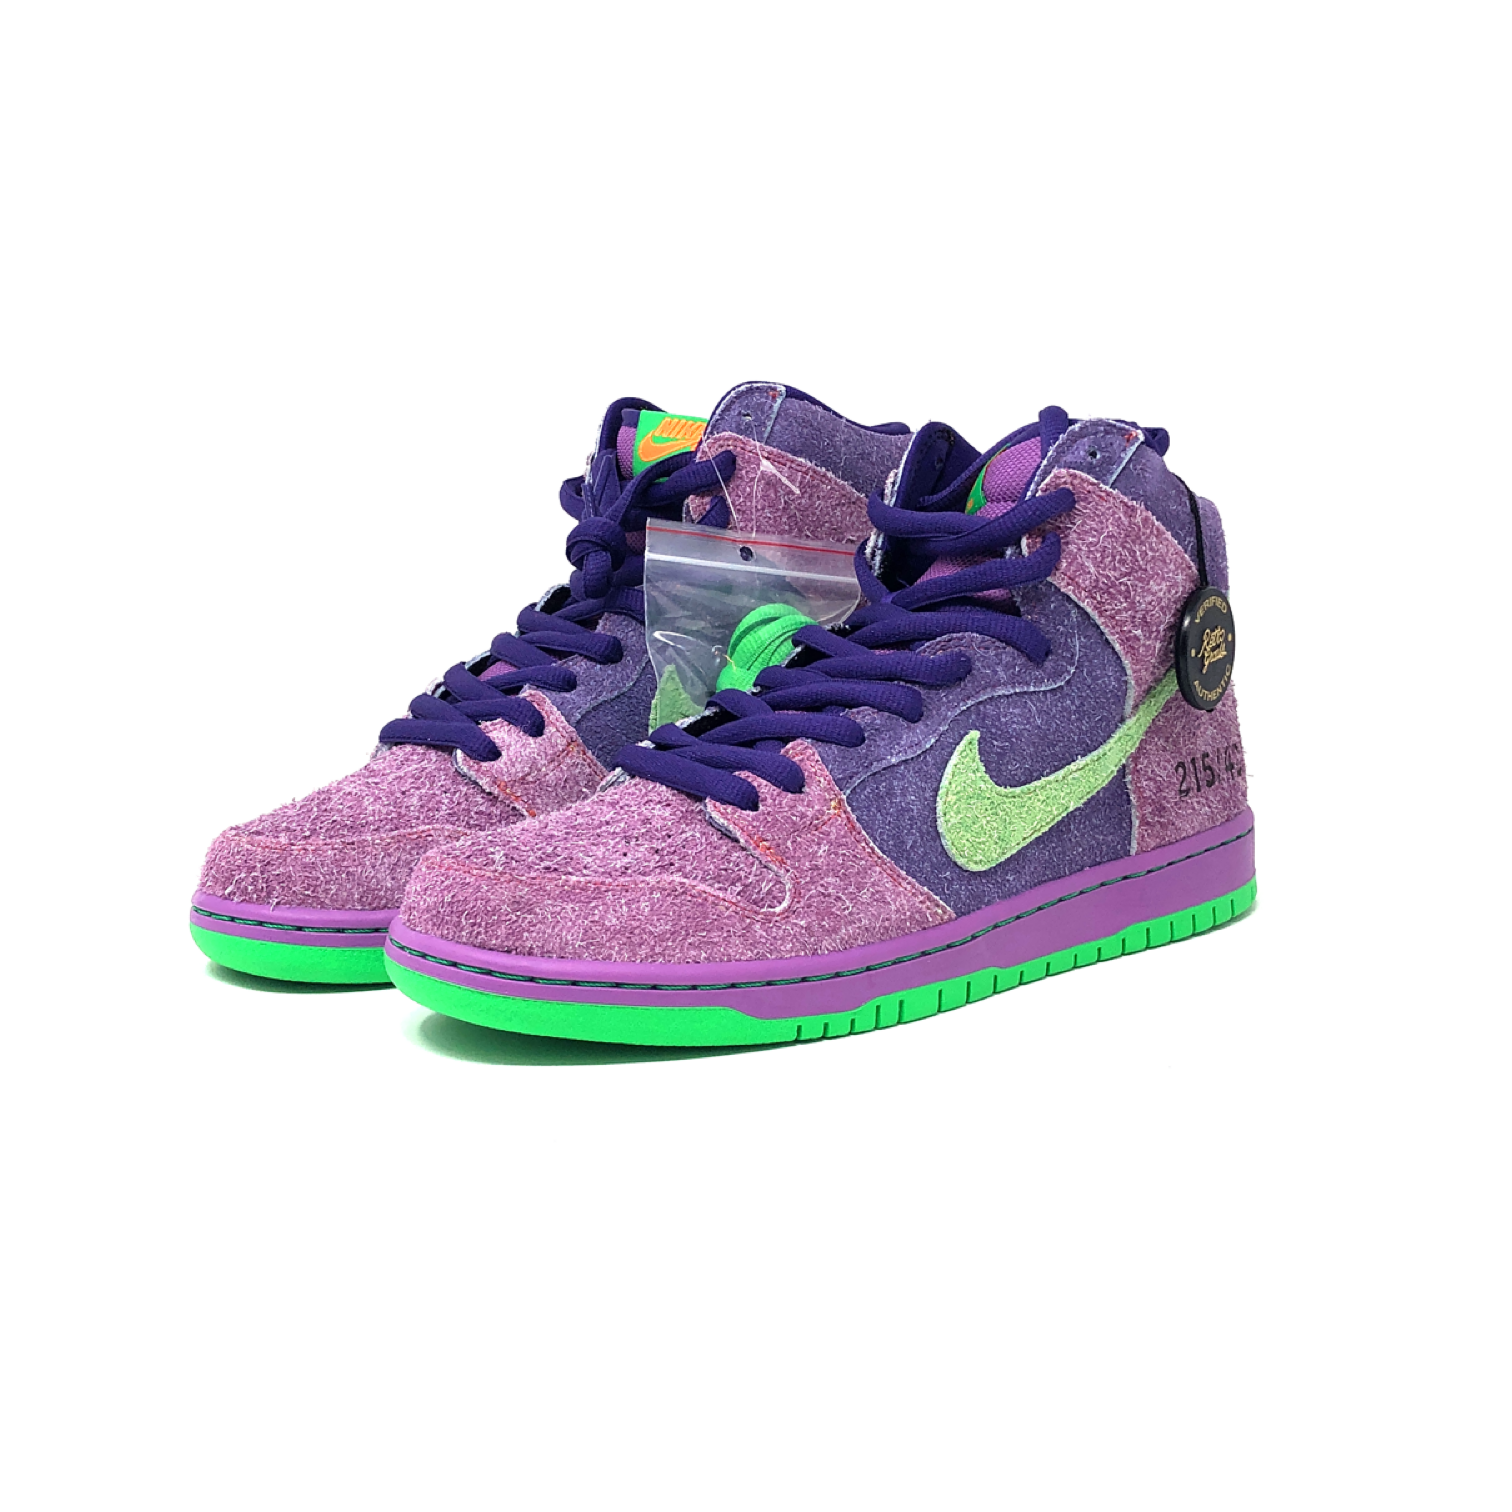 Nike SB Dunk Low “Skunks” Custom 420